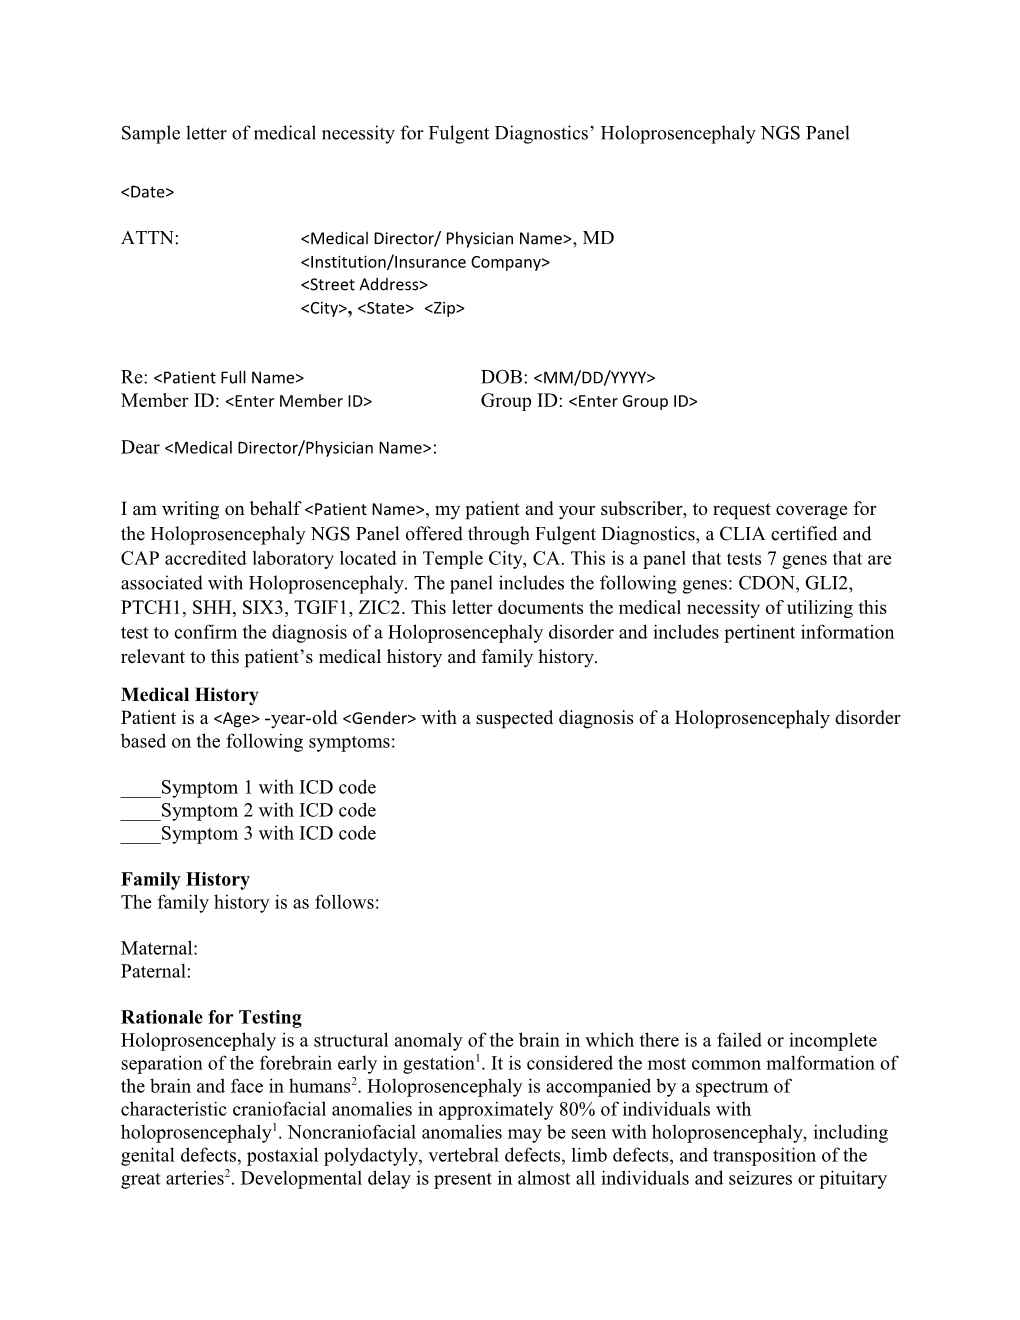 Sample Letter of Medical Necessity for Fulgent Diagnostics Holoprosencephaly NGS Panel